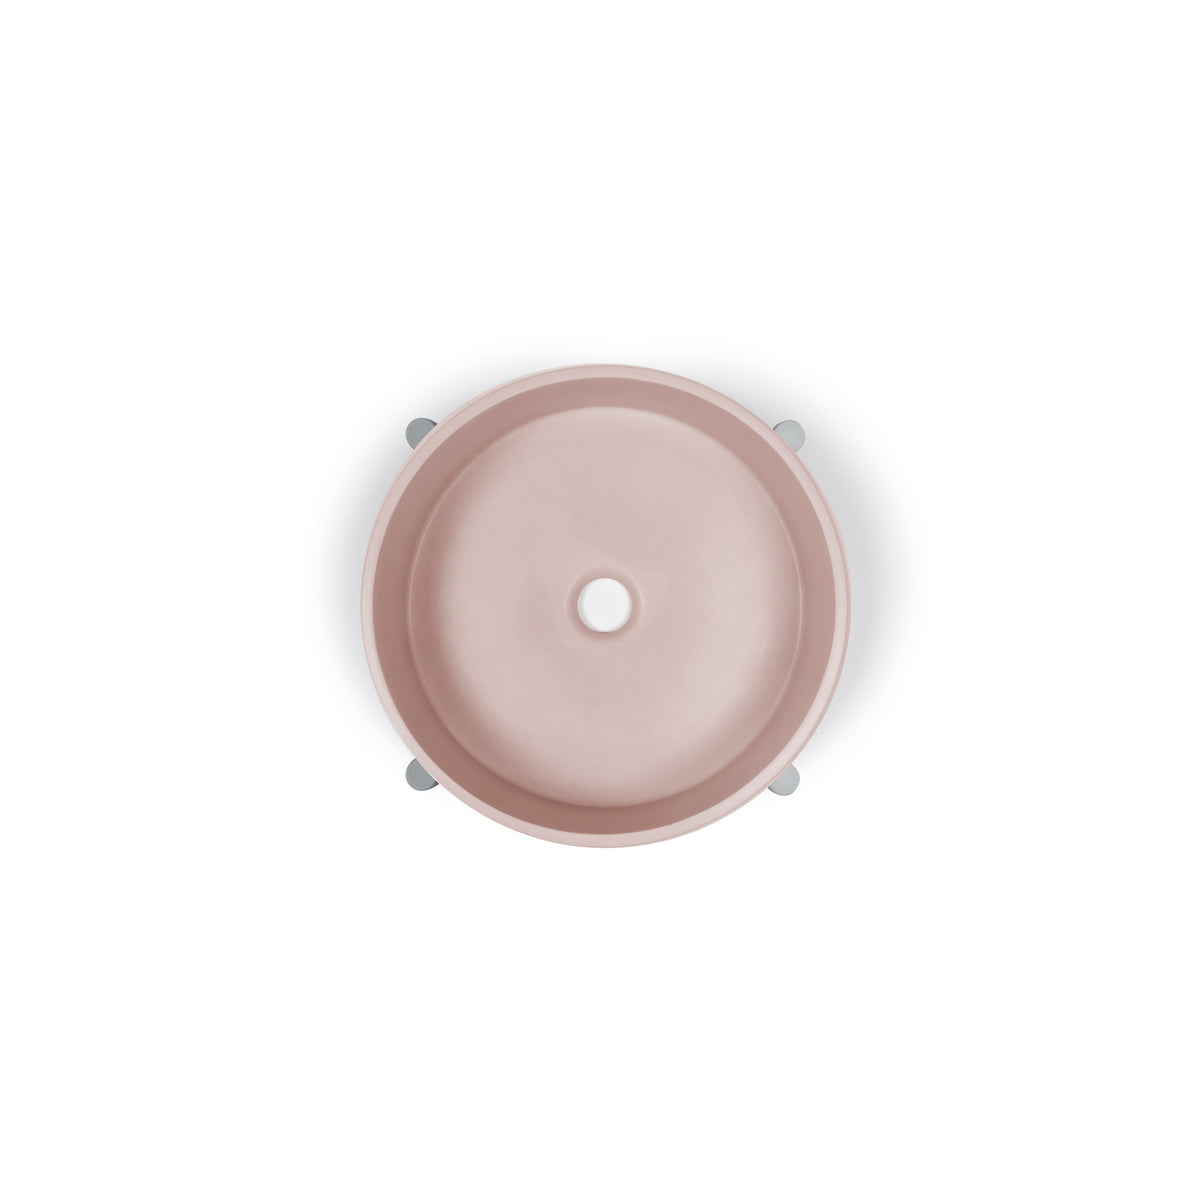 Bowl Basin - Stand (Blush Pink,White Frame)